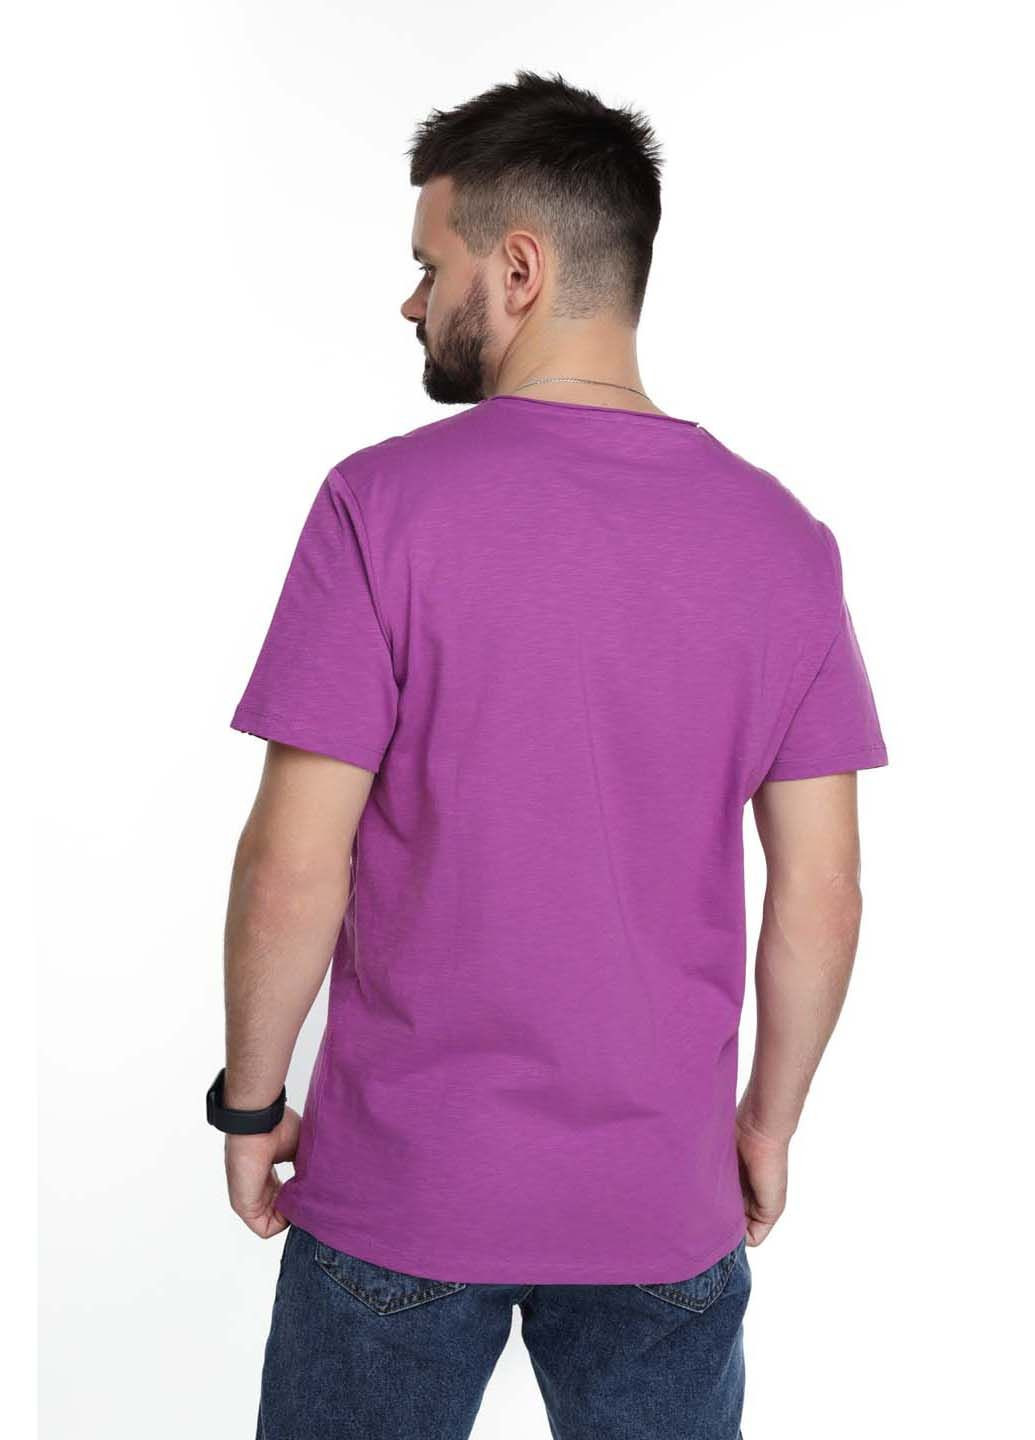 Фиолетовая футболка MCL